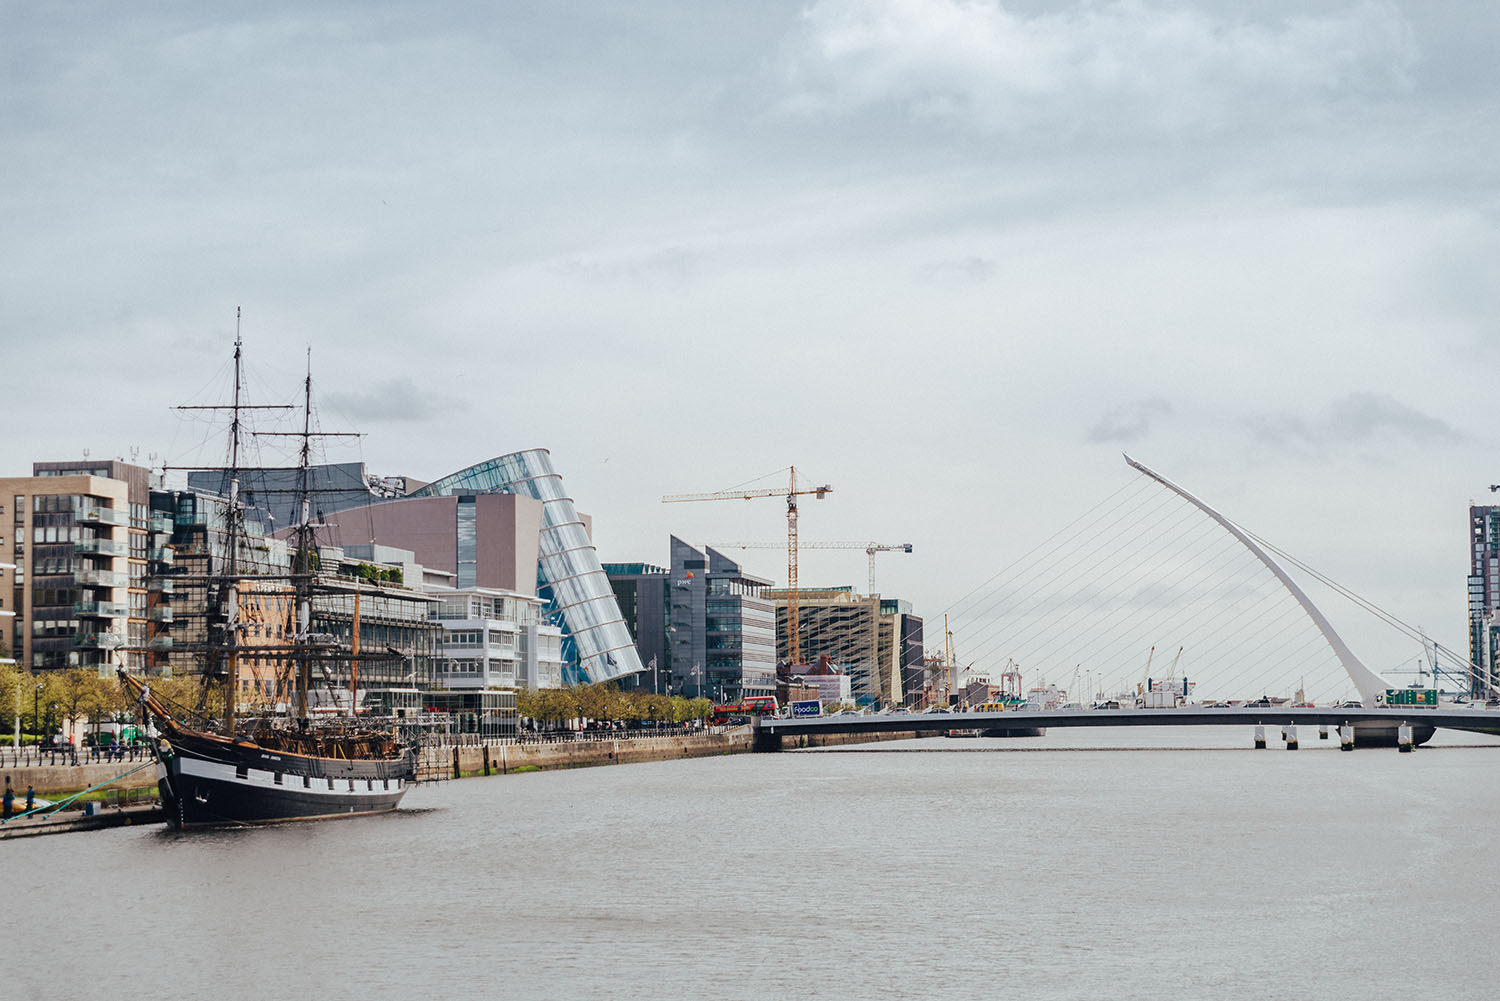 The Samuel Beckett Bridge in Dublin